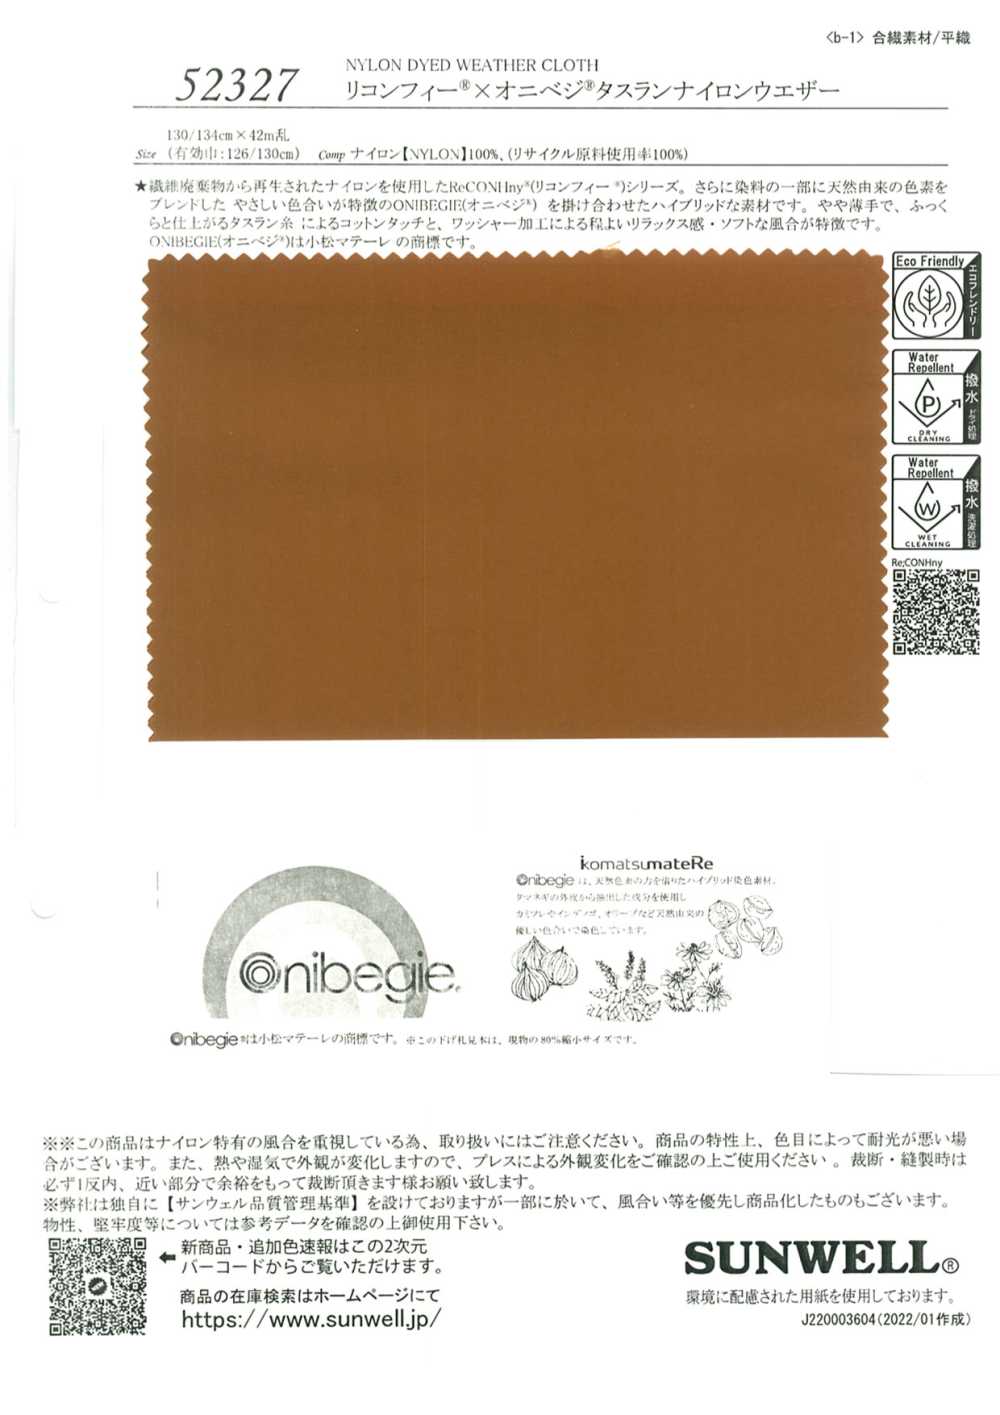 52327 ReCONHny® × ONIVEGE® Tissu En Nylon Taslan[Fabrication De Textile] SUNWELL